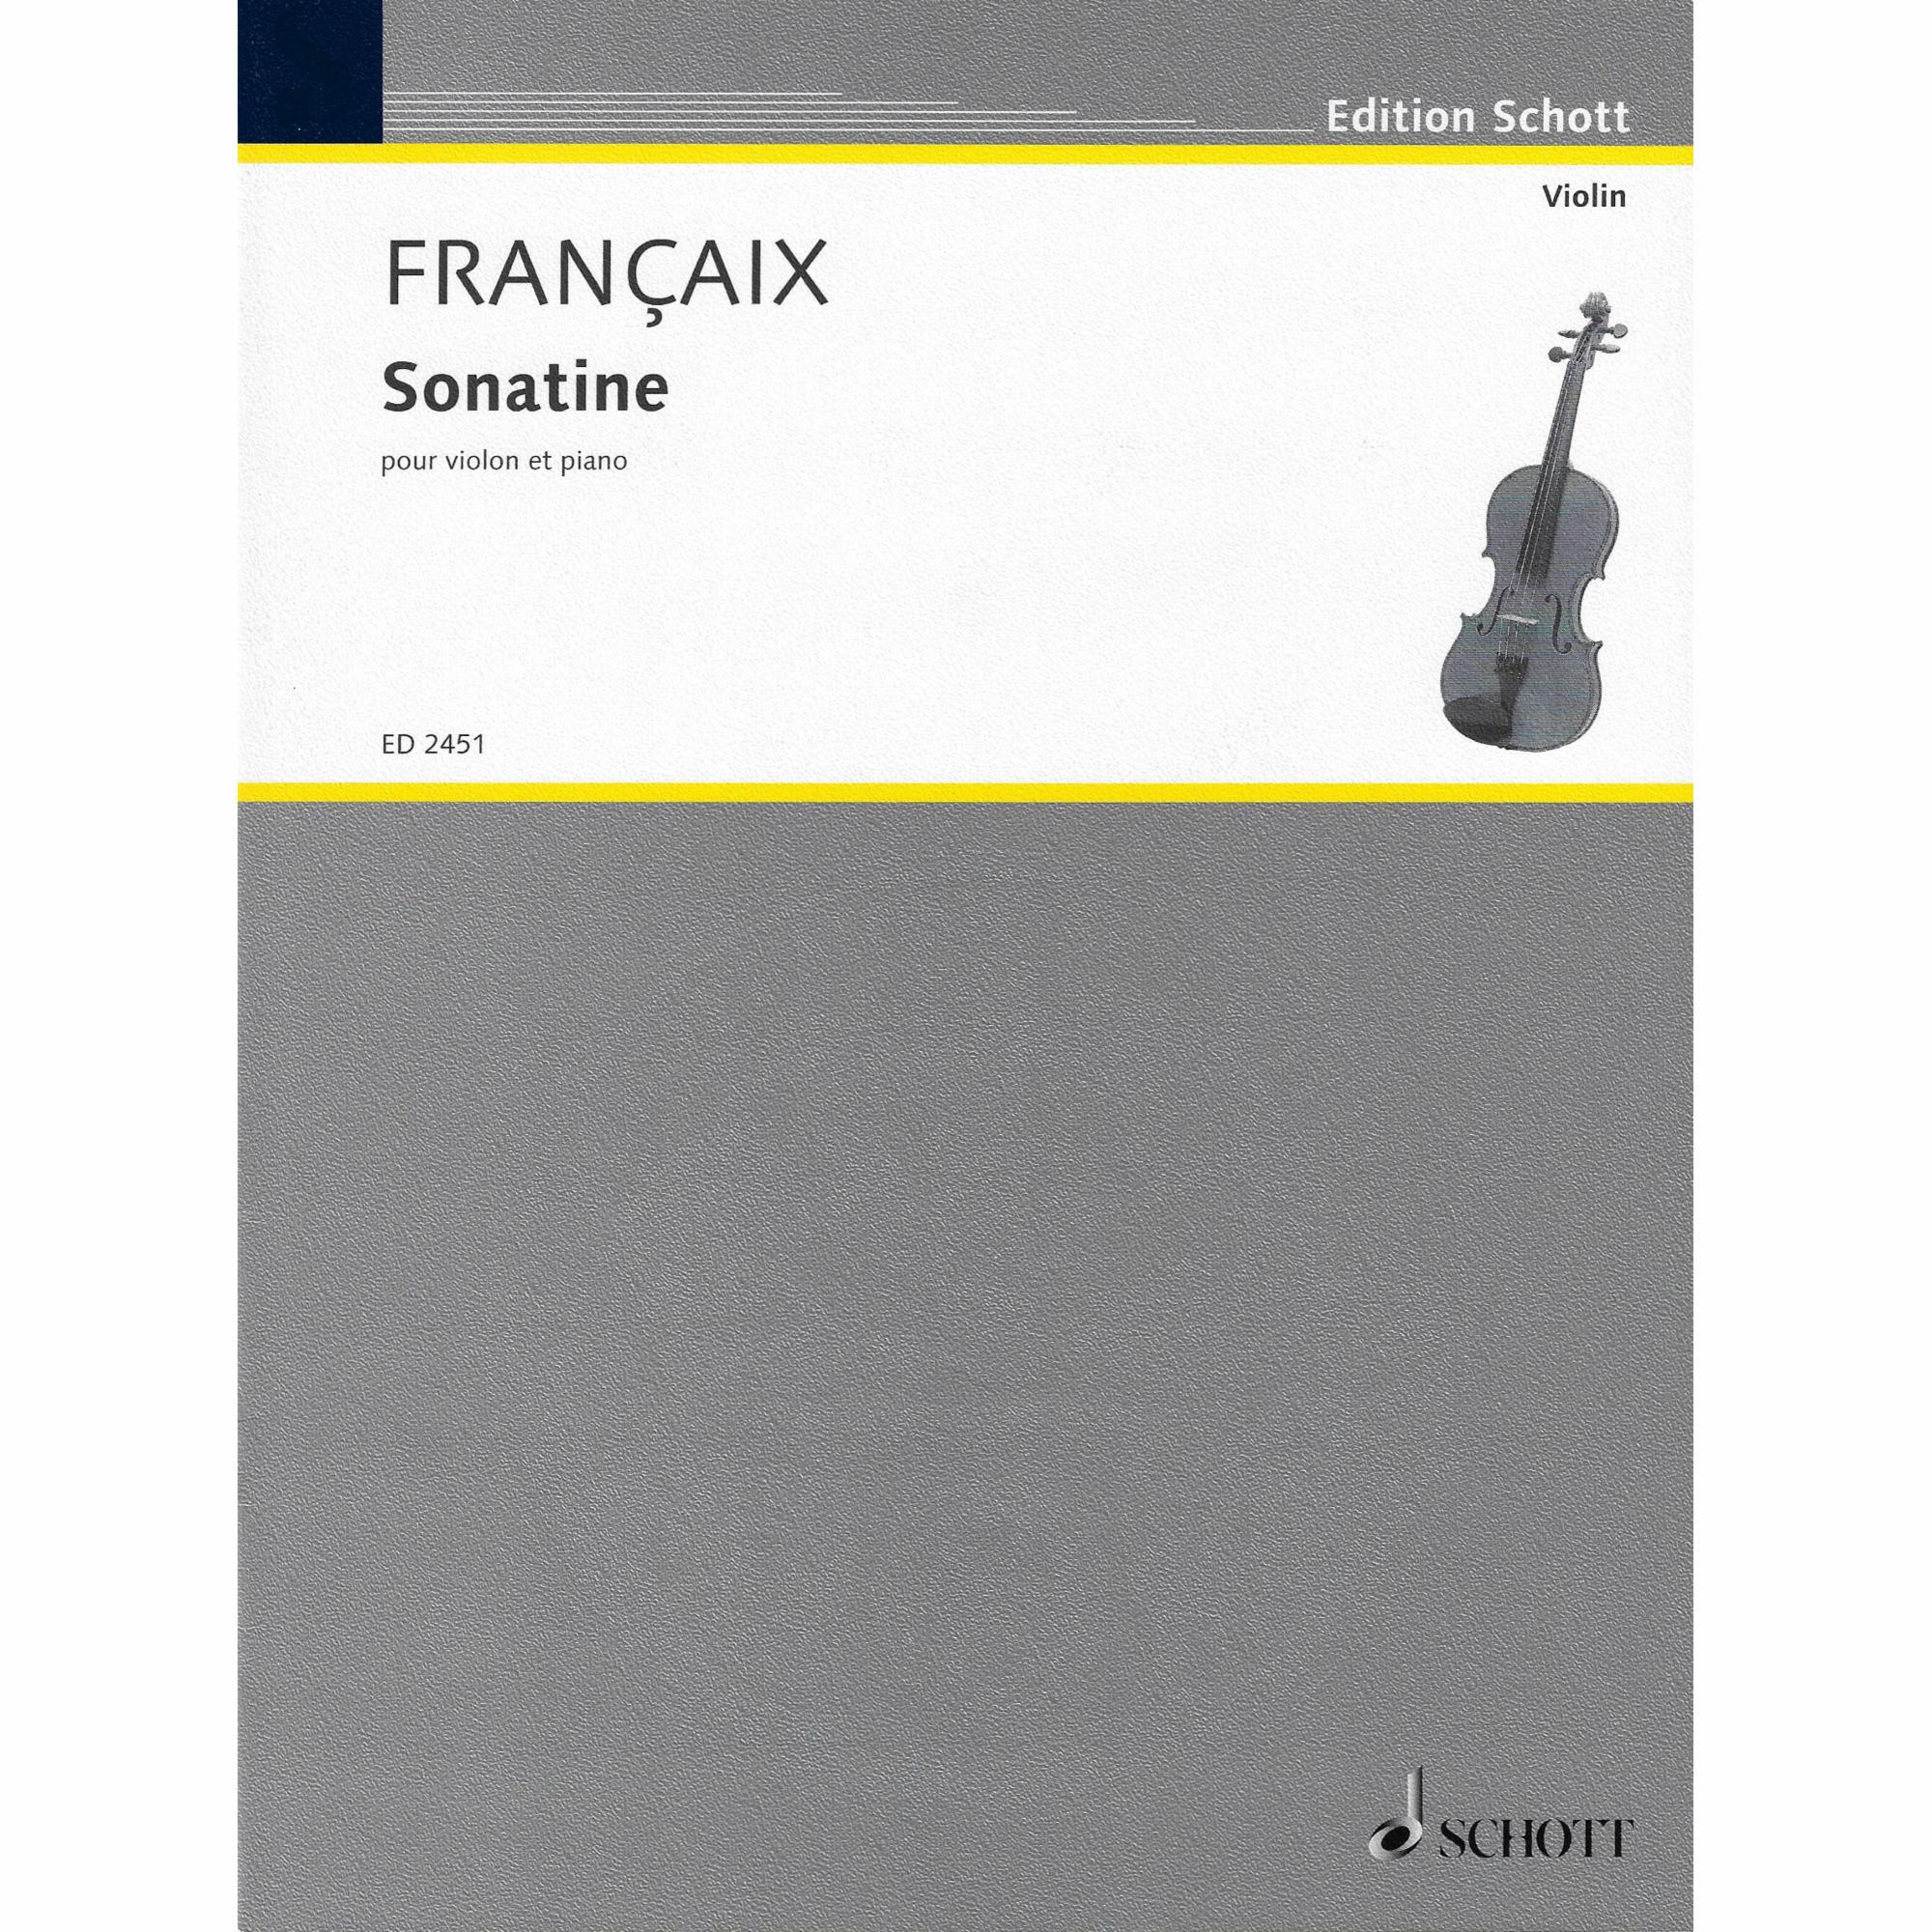 Francaix -- Sonatine for Violin and Piano